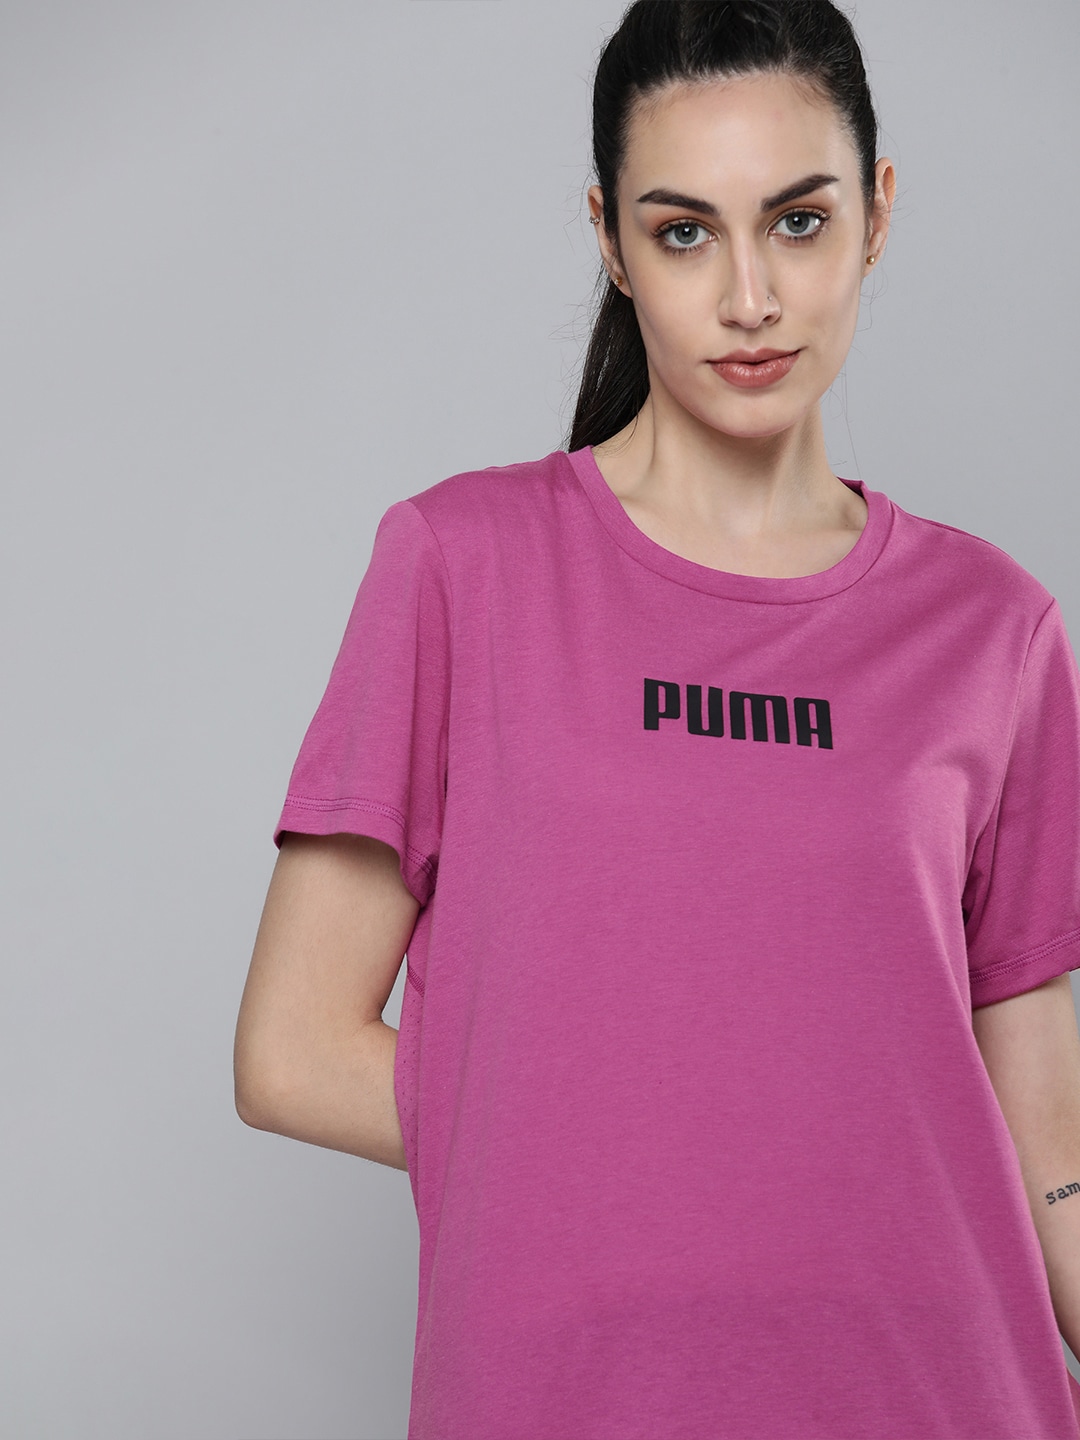 Puma Women Purple & Black Logo Printed Training T-shirt Price in India